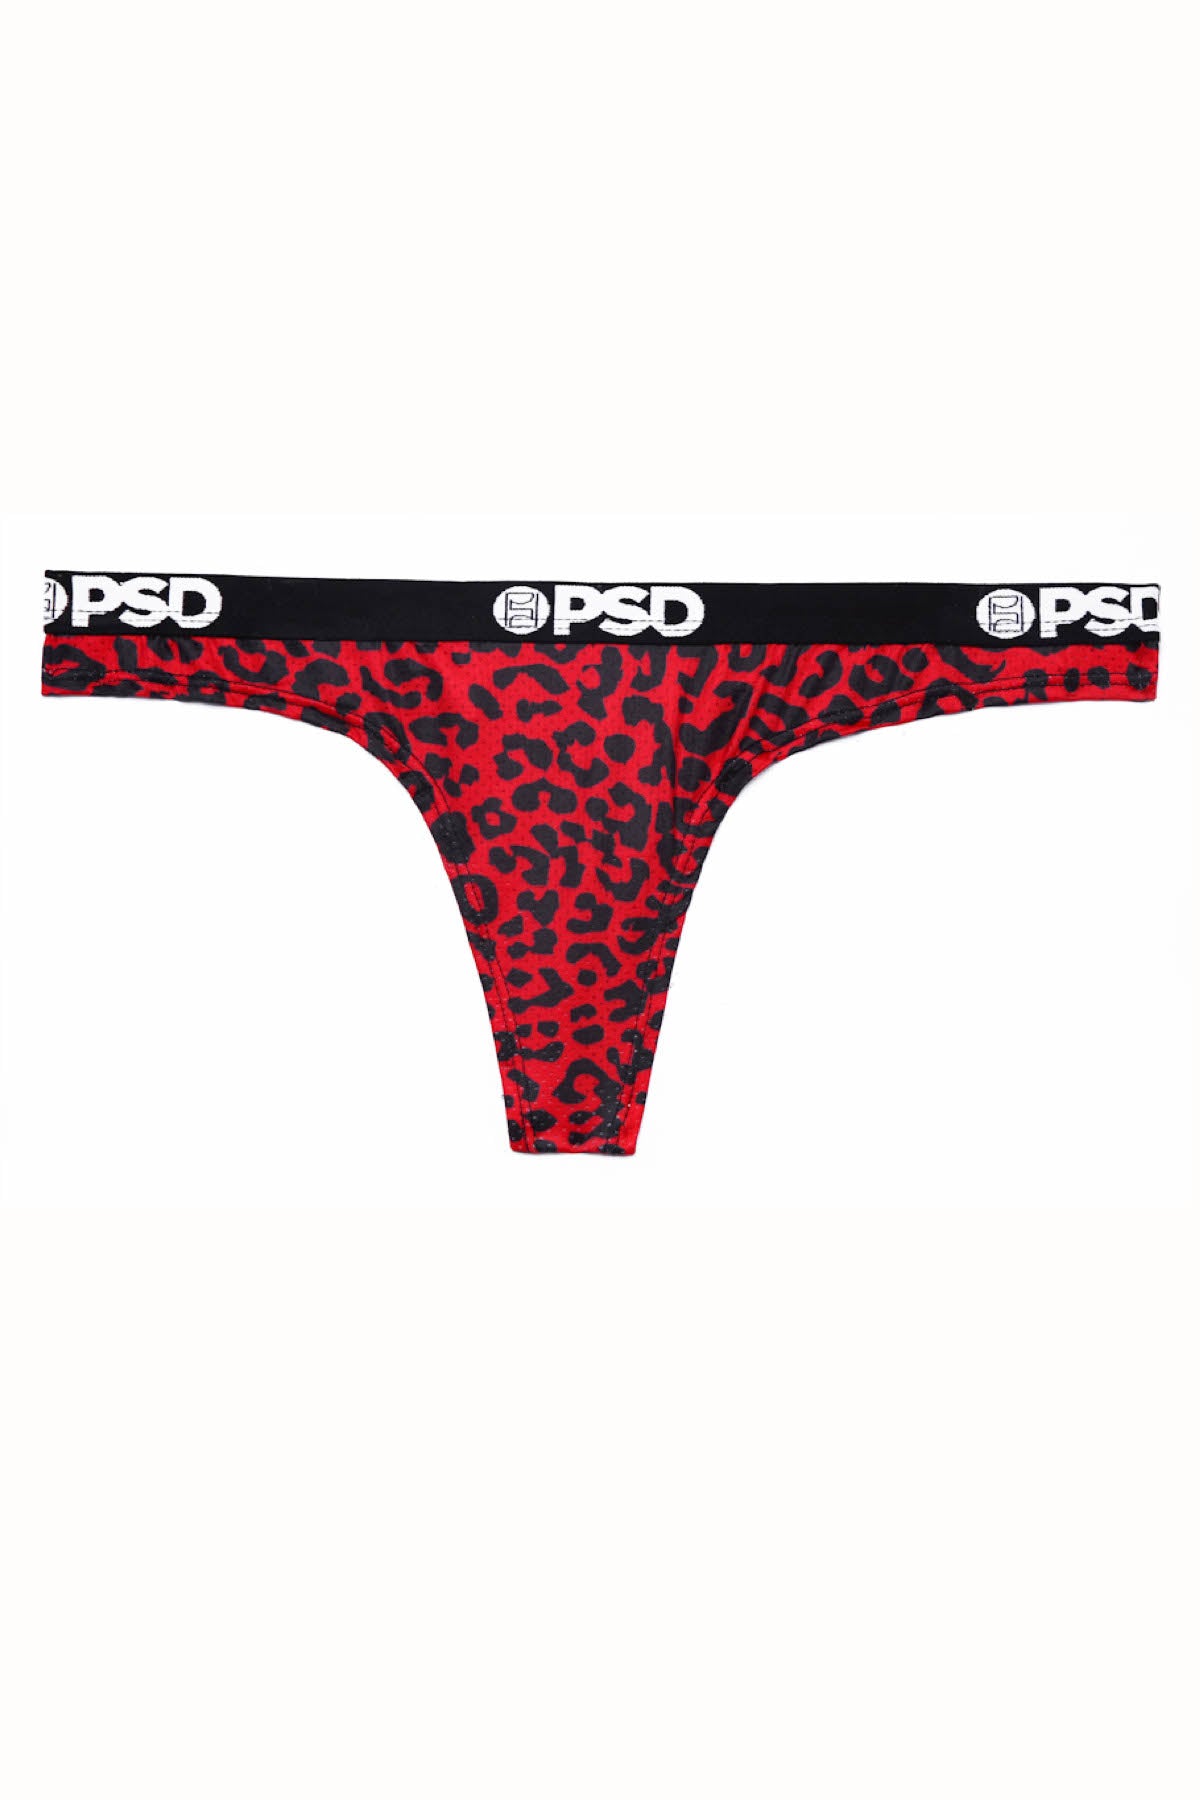 PSD Red Cheetah Thong